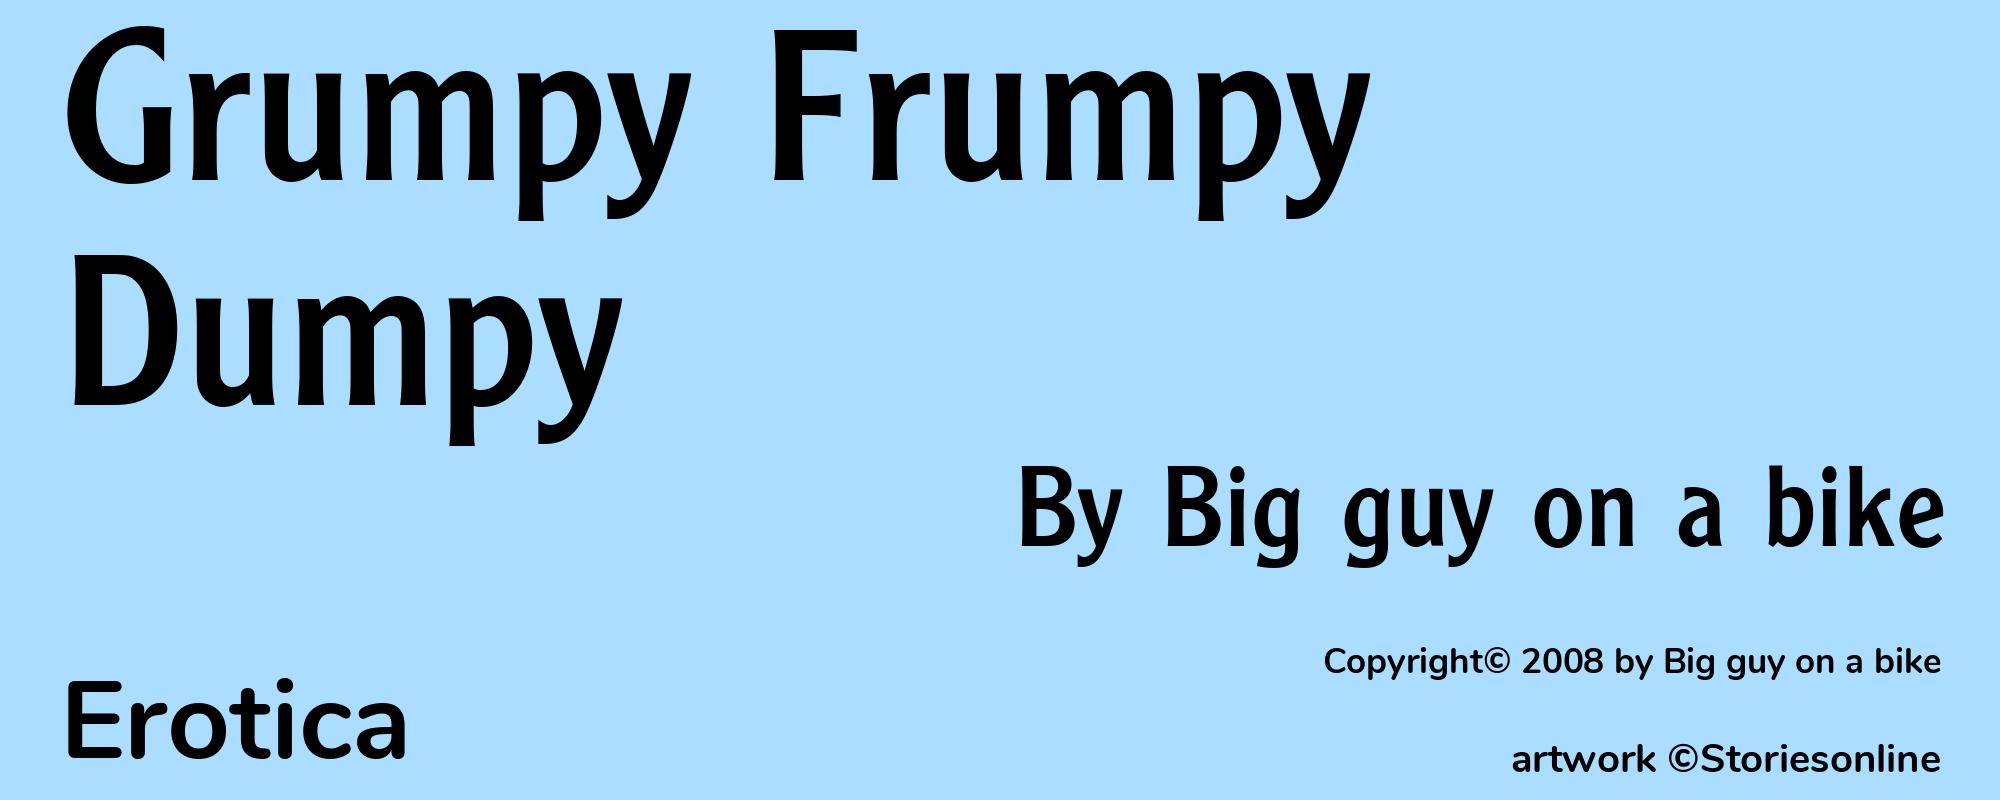 Grumpy Frumpy Dumpy - Cover